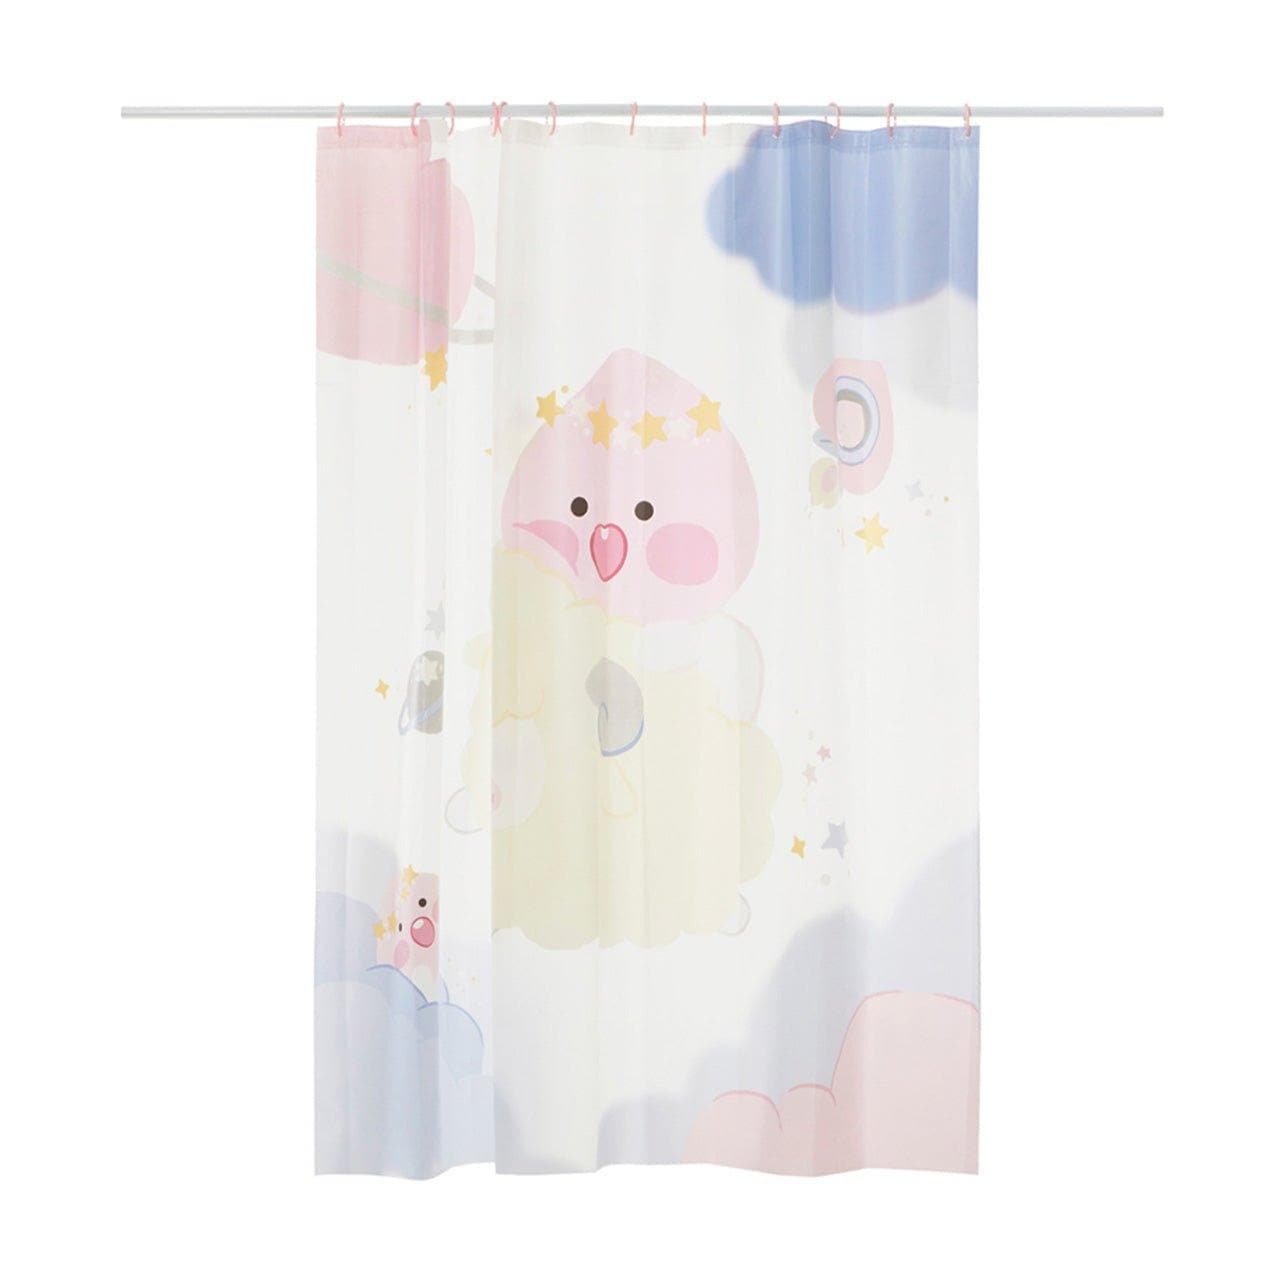 Lovely Apeach Shower Curtain - Daebak